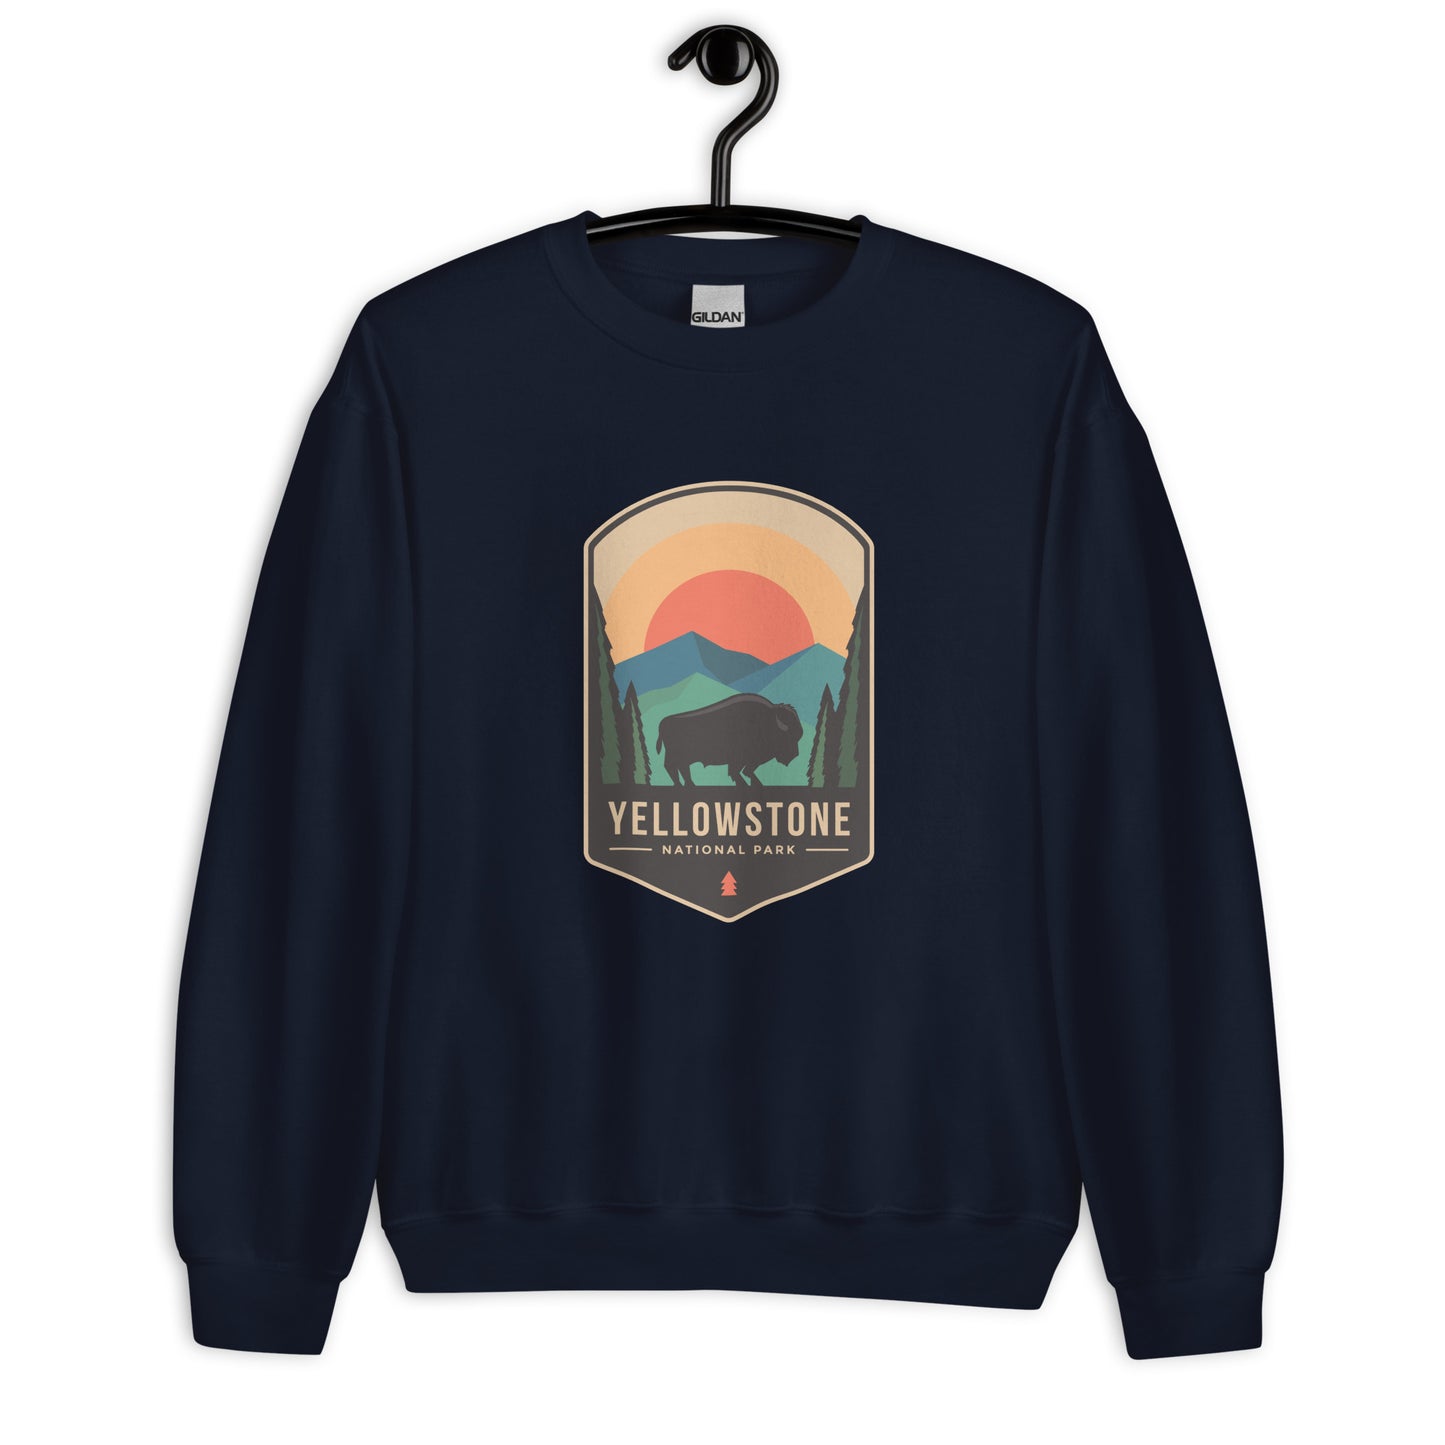 Yellowstone Bison Sweatshirt, Nature Park Vintage Graphic Crewneck Sweater Jumper Pullover Men Women Aesthetic Top Starcove Fashion